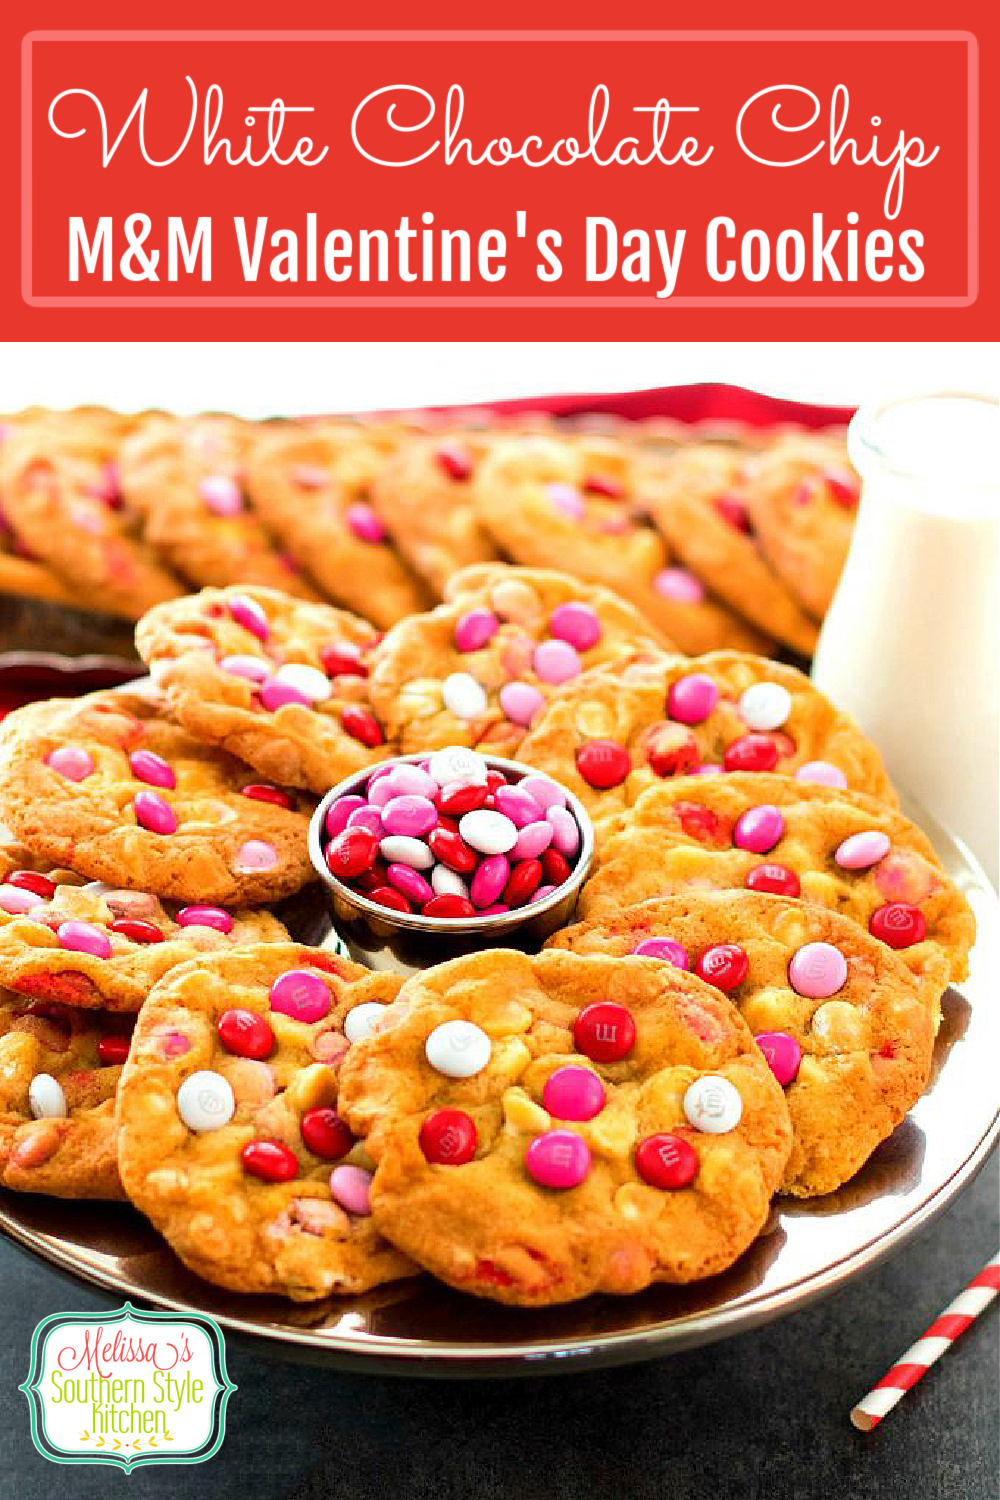 Bake something yummy for your sweetie this Valentine's Day #whitechocolatechipcookies #m&ms #vanetinesdaydesserts #cookierecipes #holidaybaking #whitechocolate #cookierecipes #southernrecipes via @melissasssk